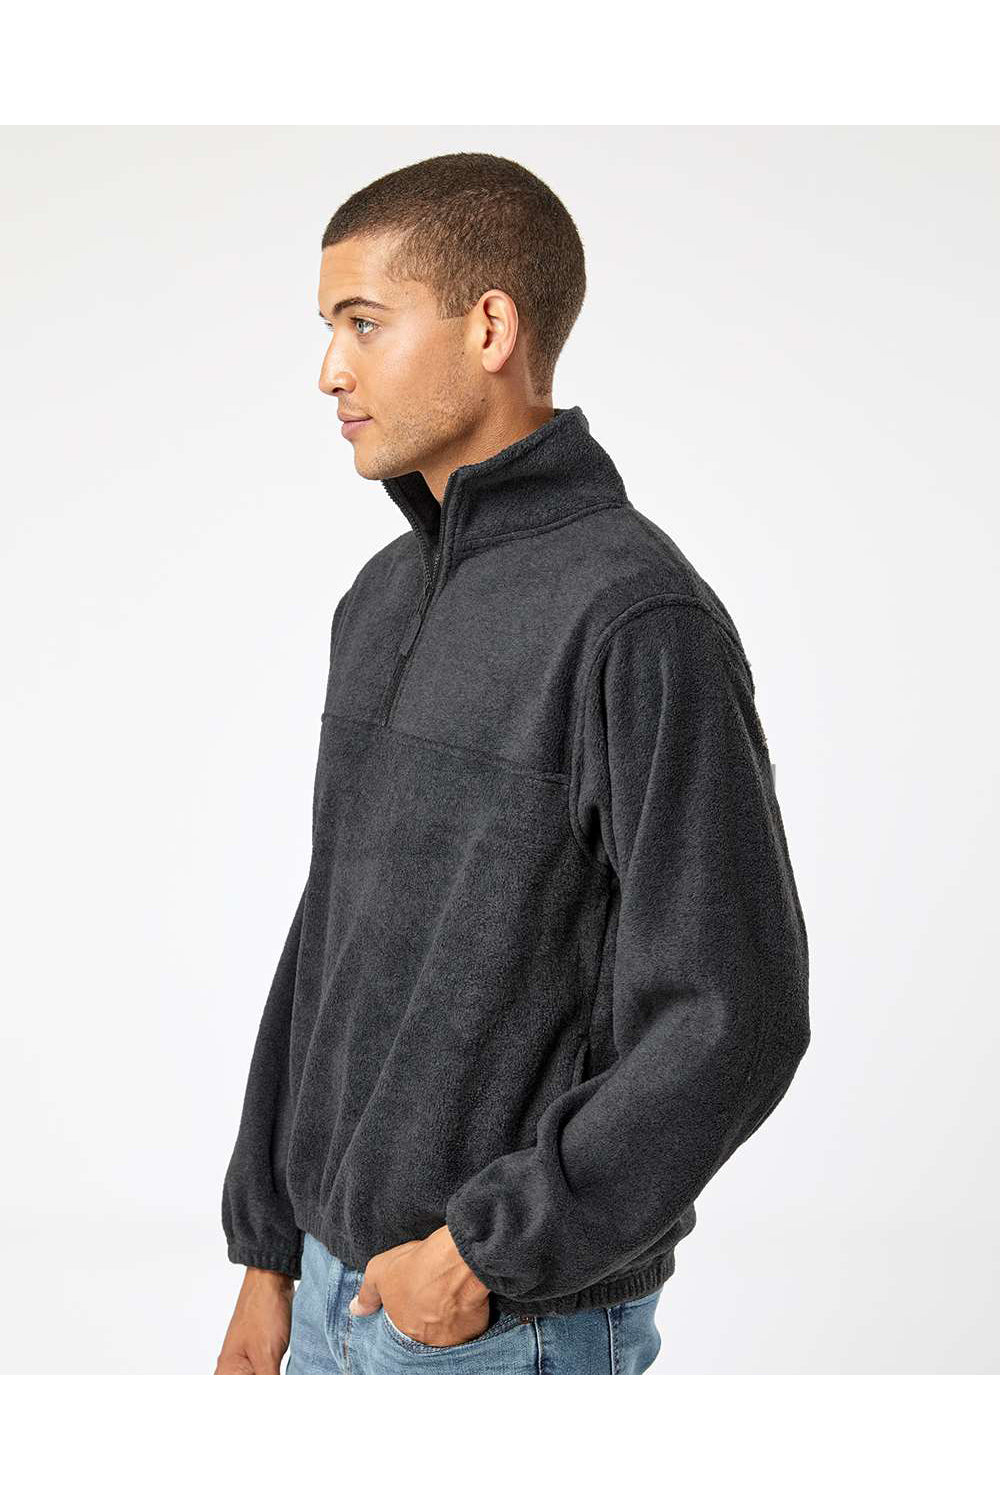 Burnside 3052 Mens Polar Fleece 1/4 Zip Sweatshirt Heather Charcoal Grey Model Side